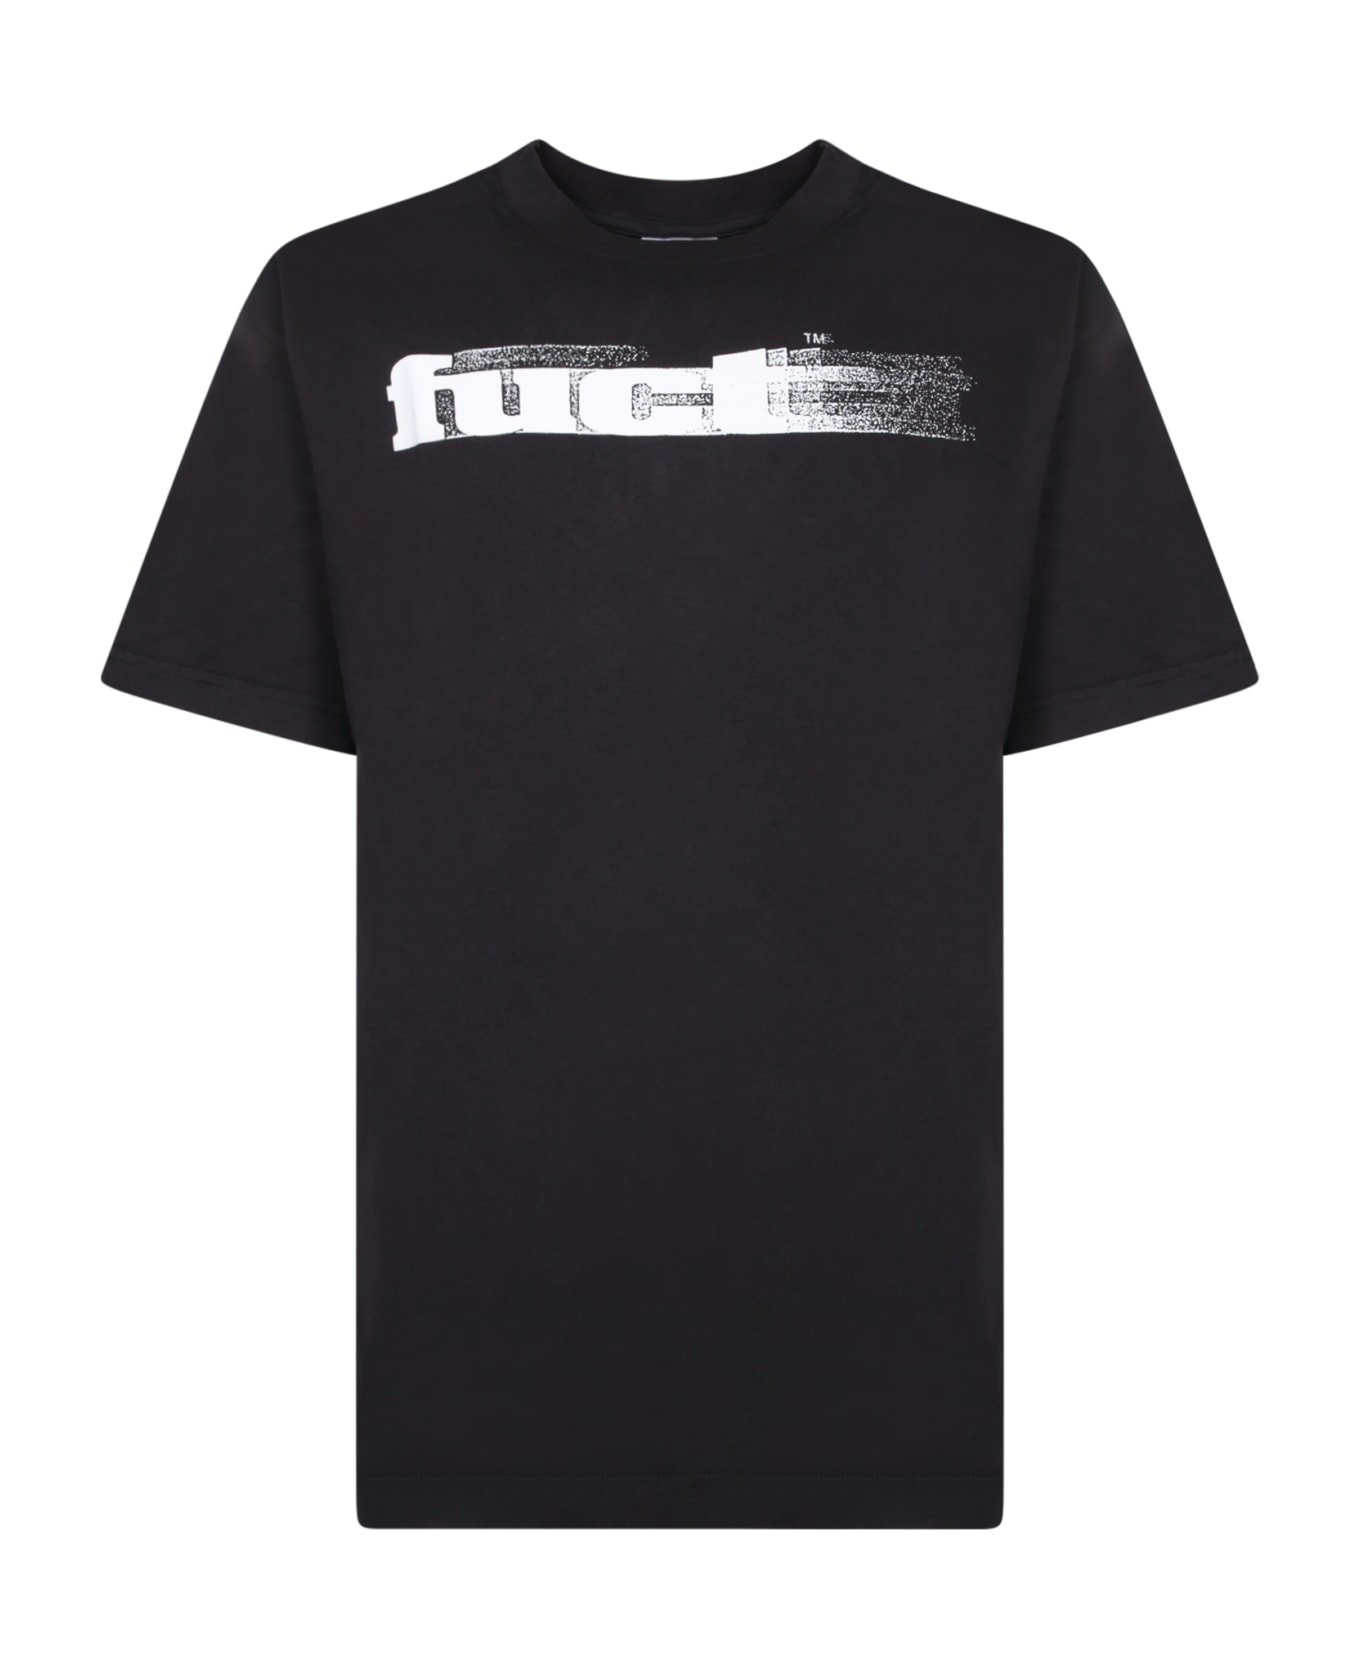 Fuct Blurred Logo Black T-shirt - Black